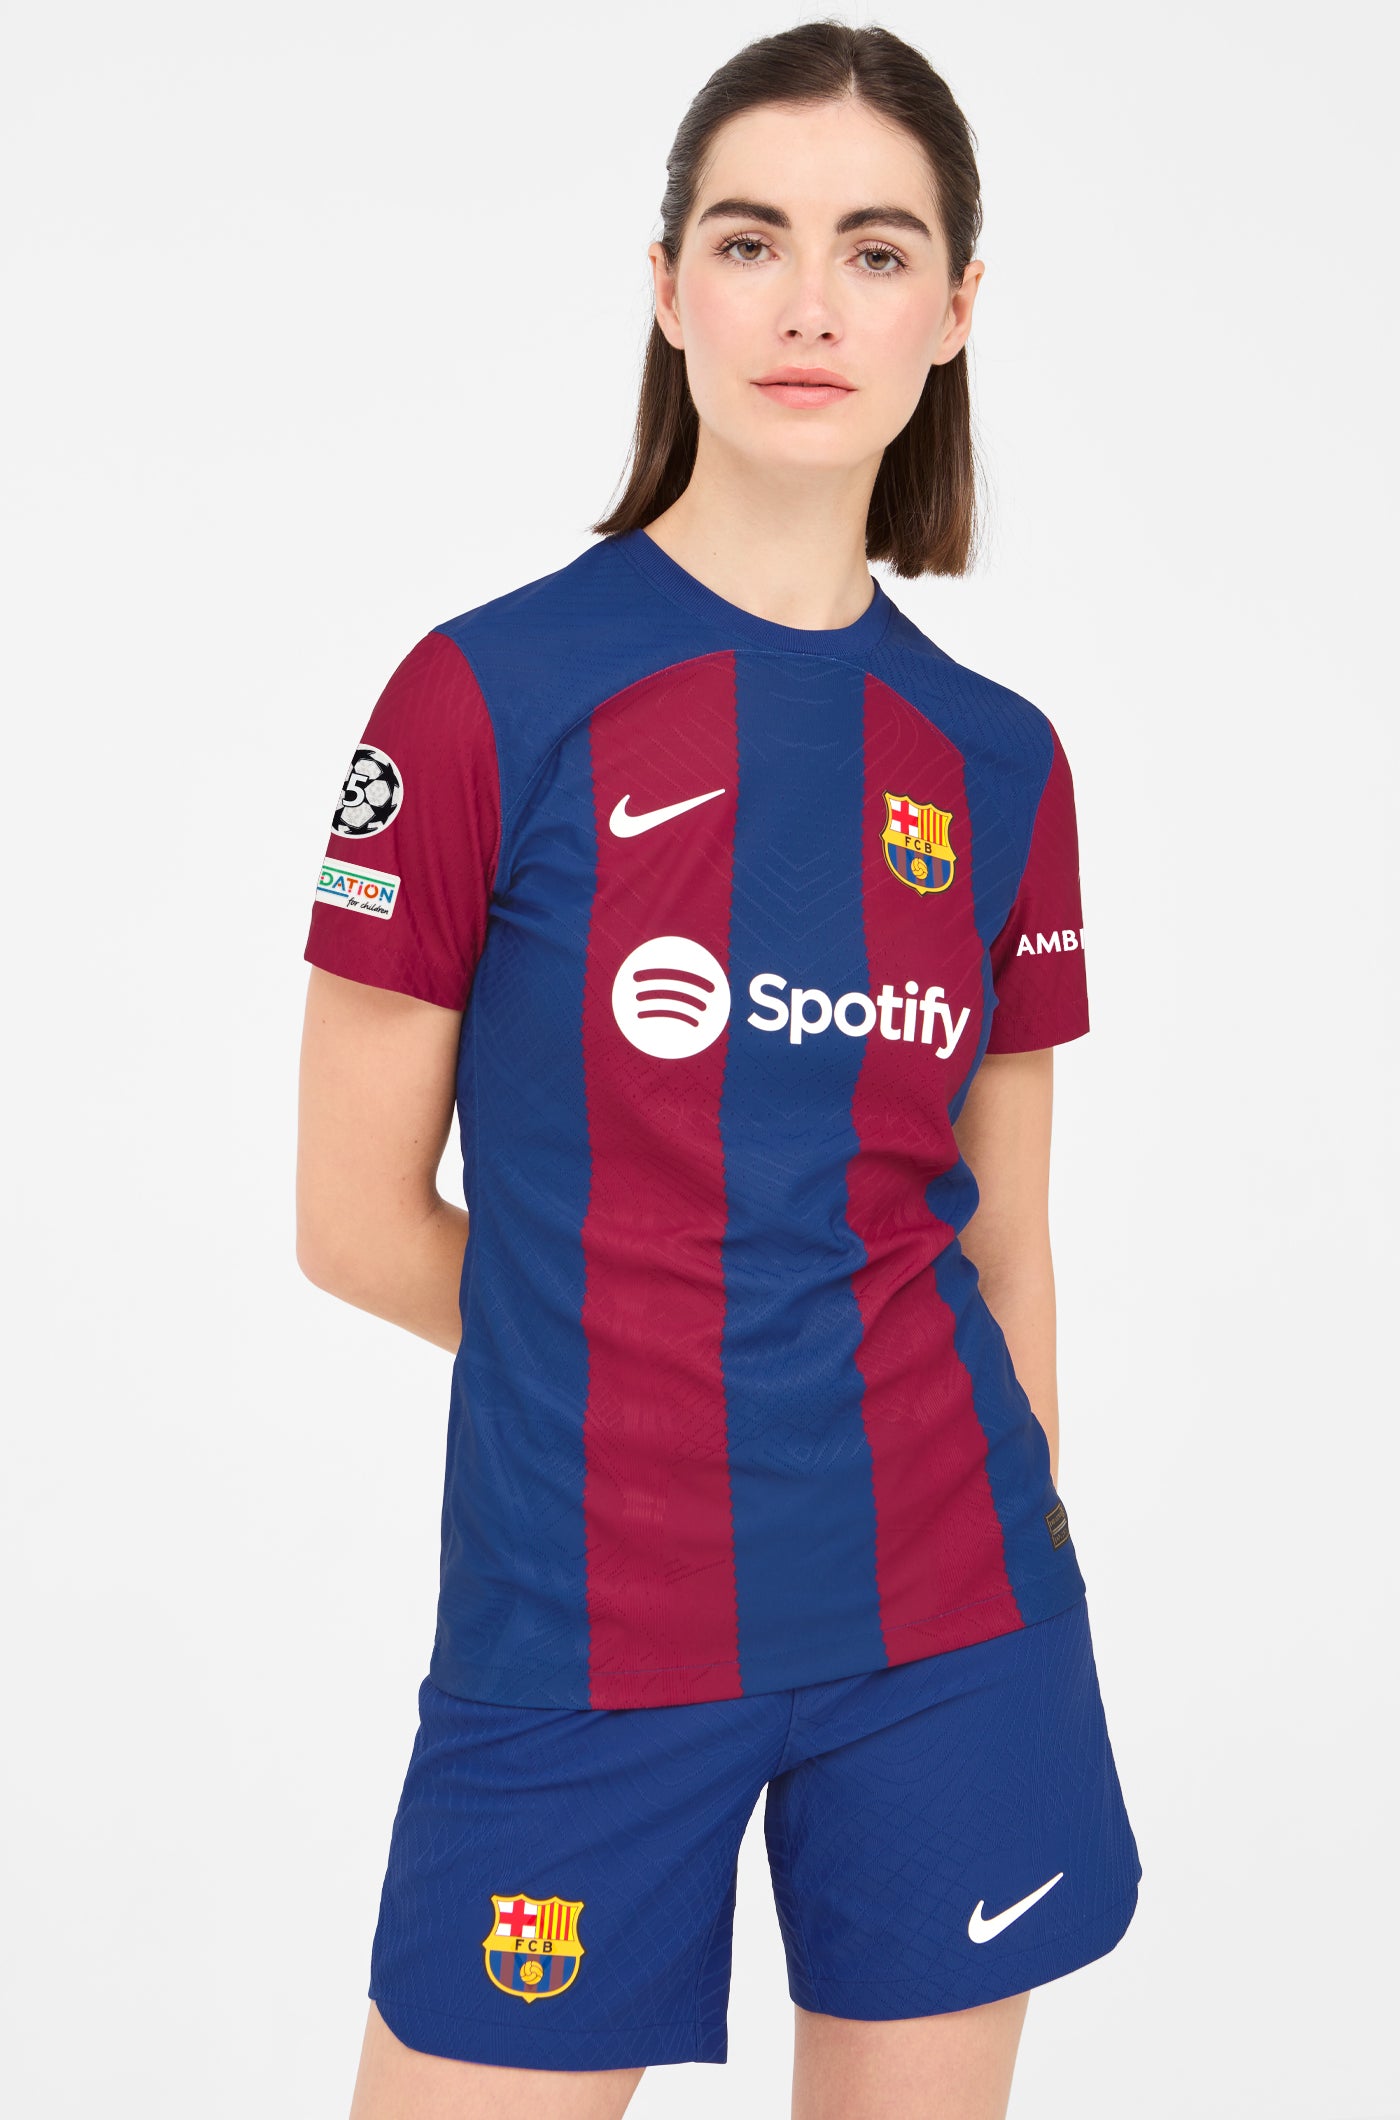 UCL FC Barcelona Home Shirt 23/24 Player’s Edition - Women - I. MARTÍNEZ